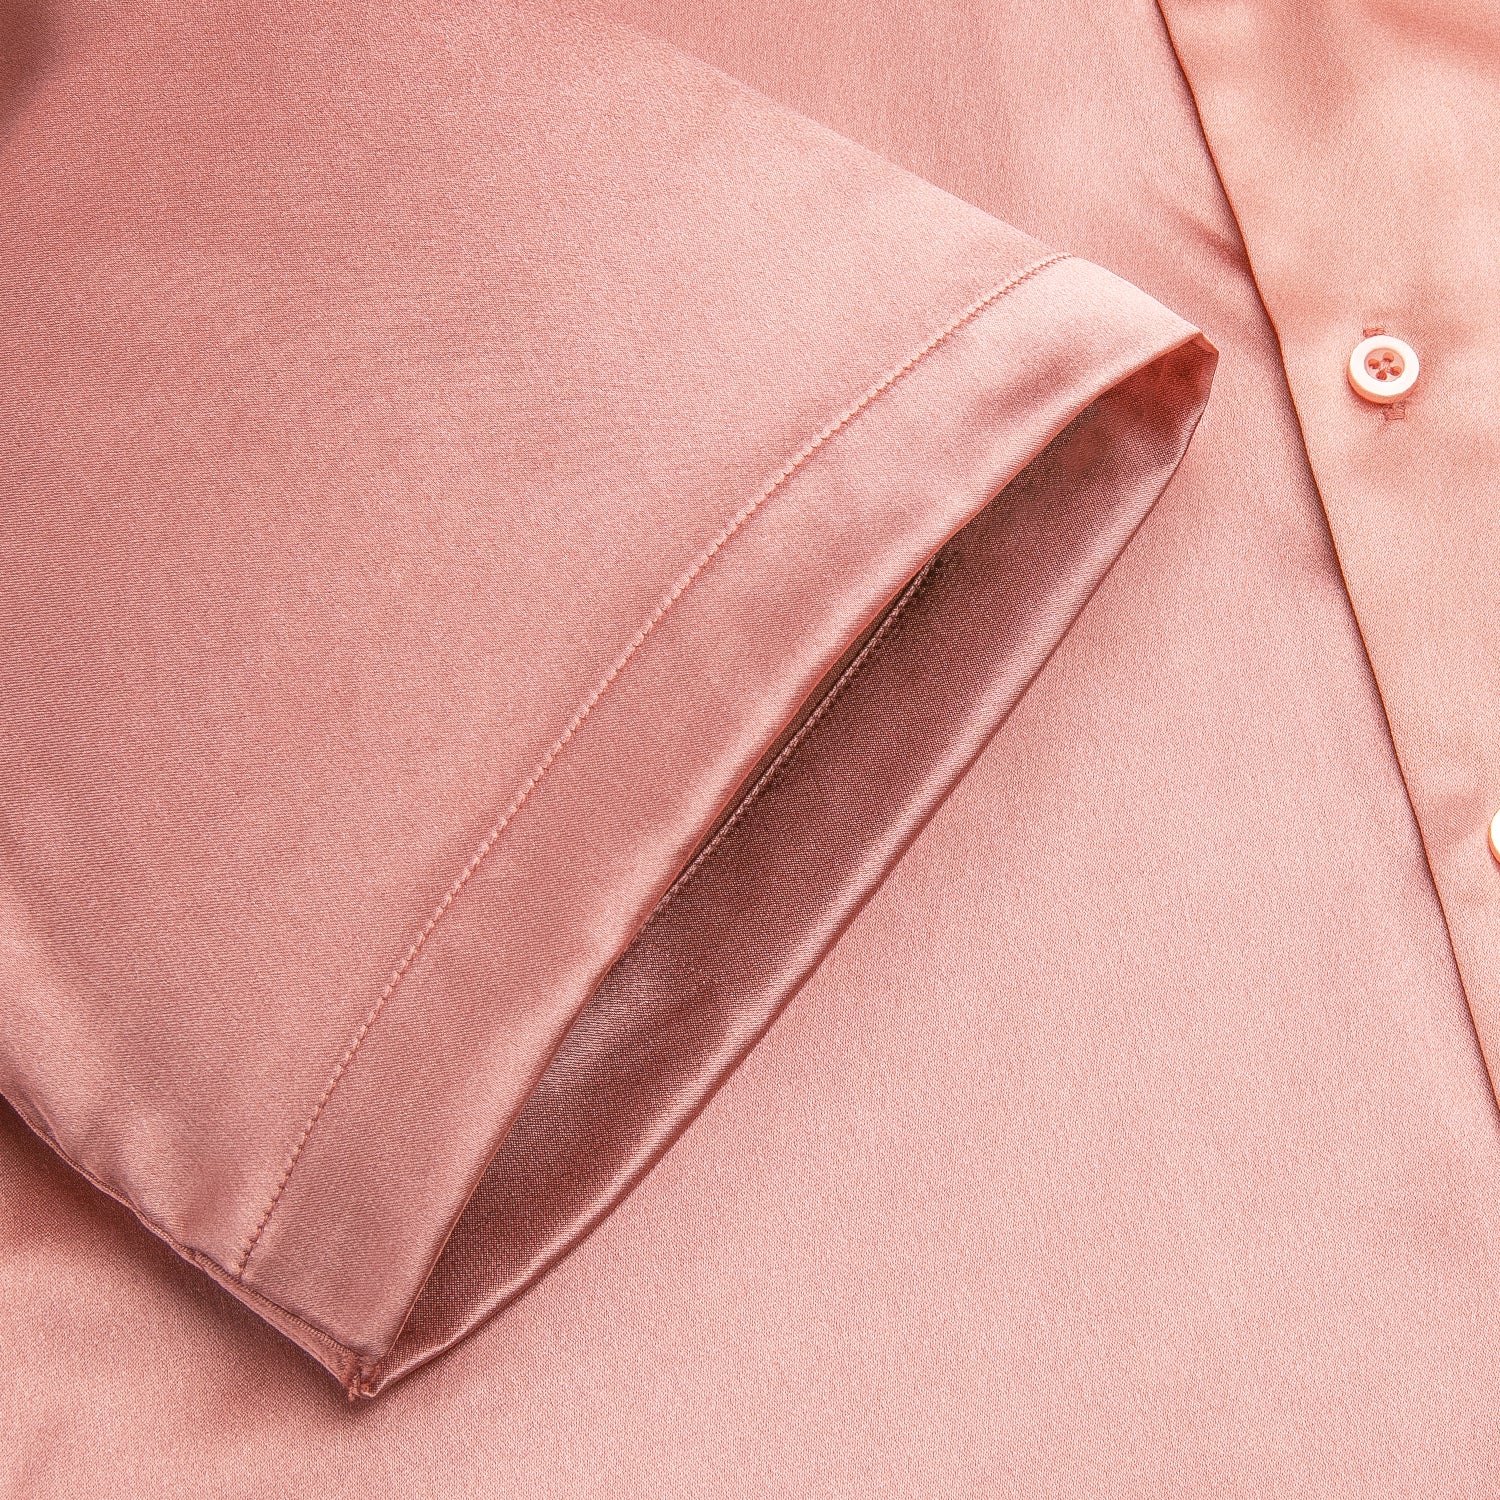 Pink Solid Satin Men's Short Sleeve Shirt